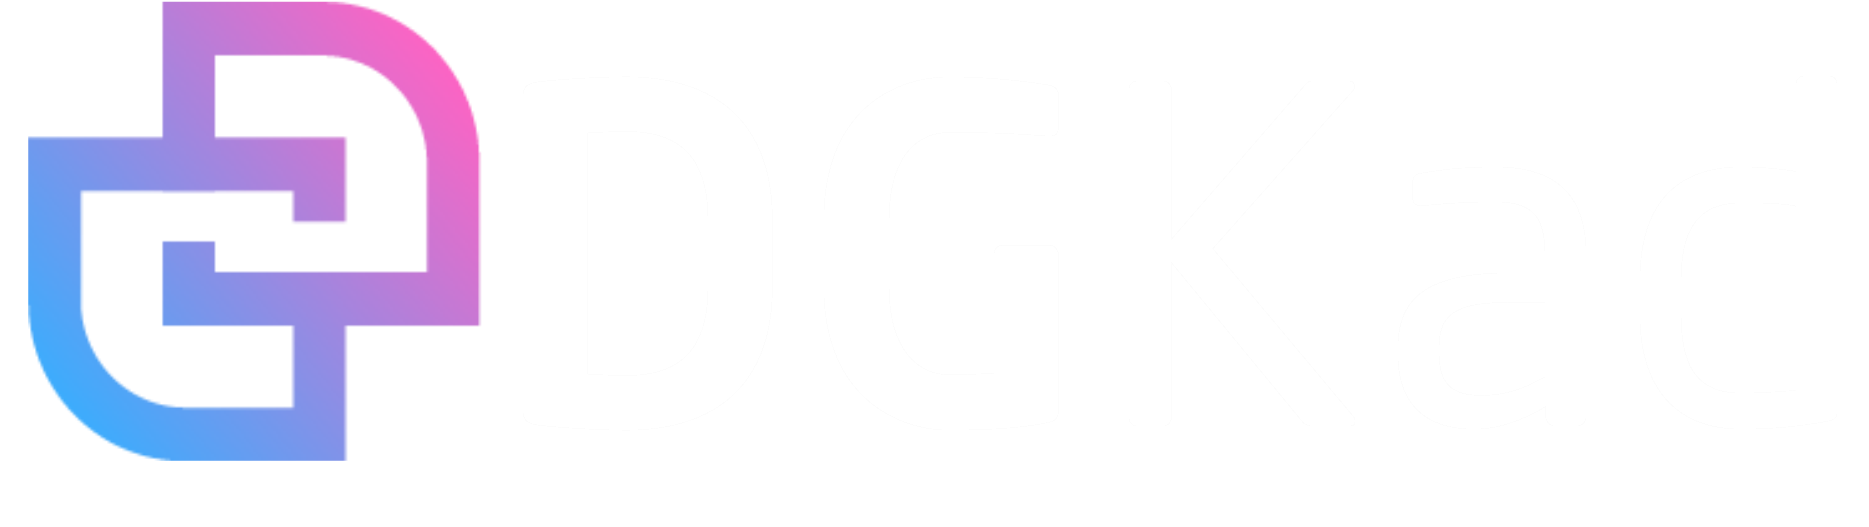 logo simbol color text white